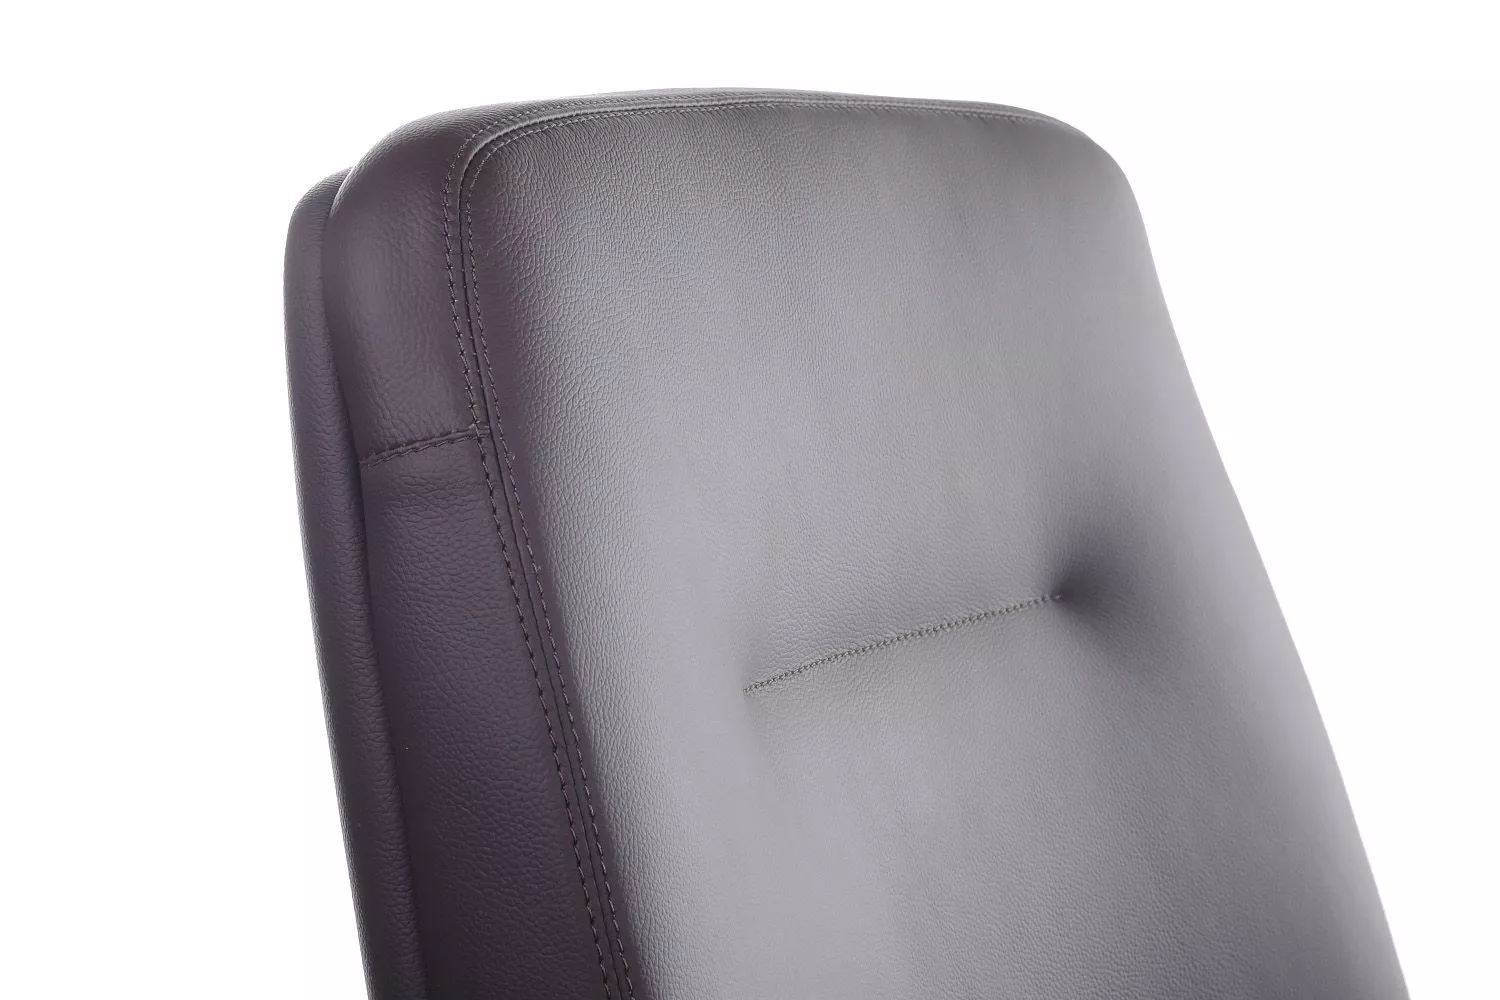 Кресло RIVA DESIGN Alonzo-CF (С1711) темно-коричневый